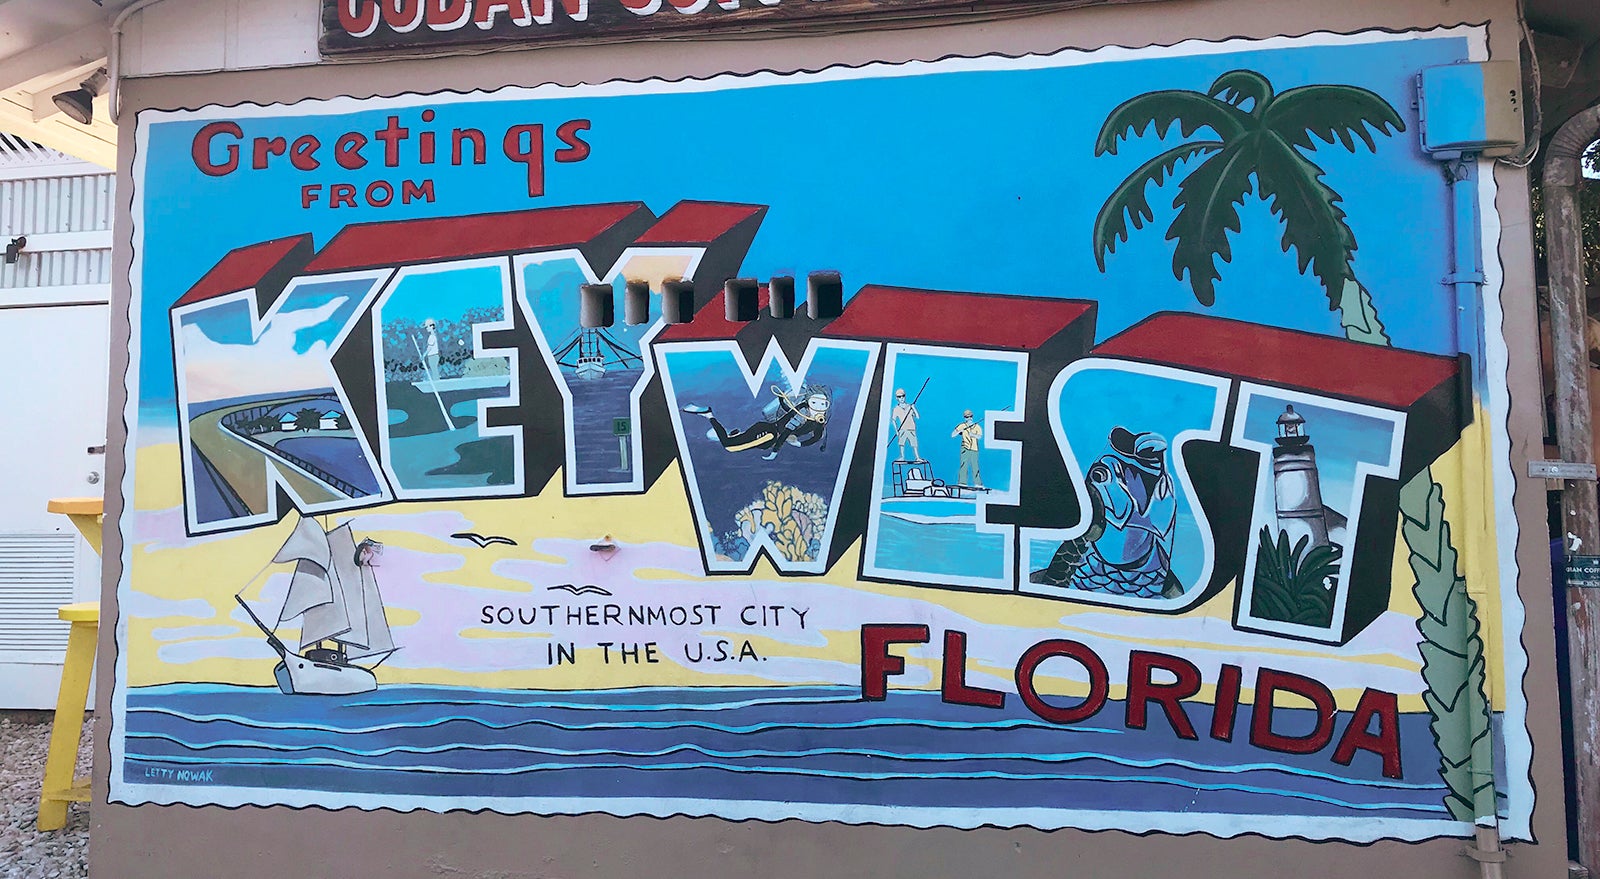 Key West Florida sign